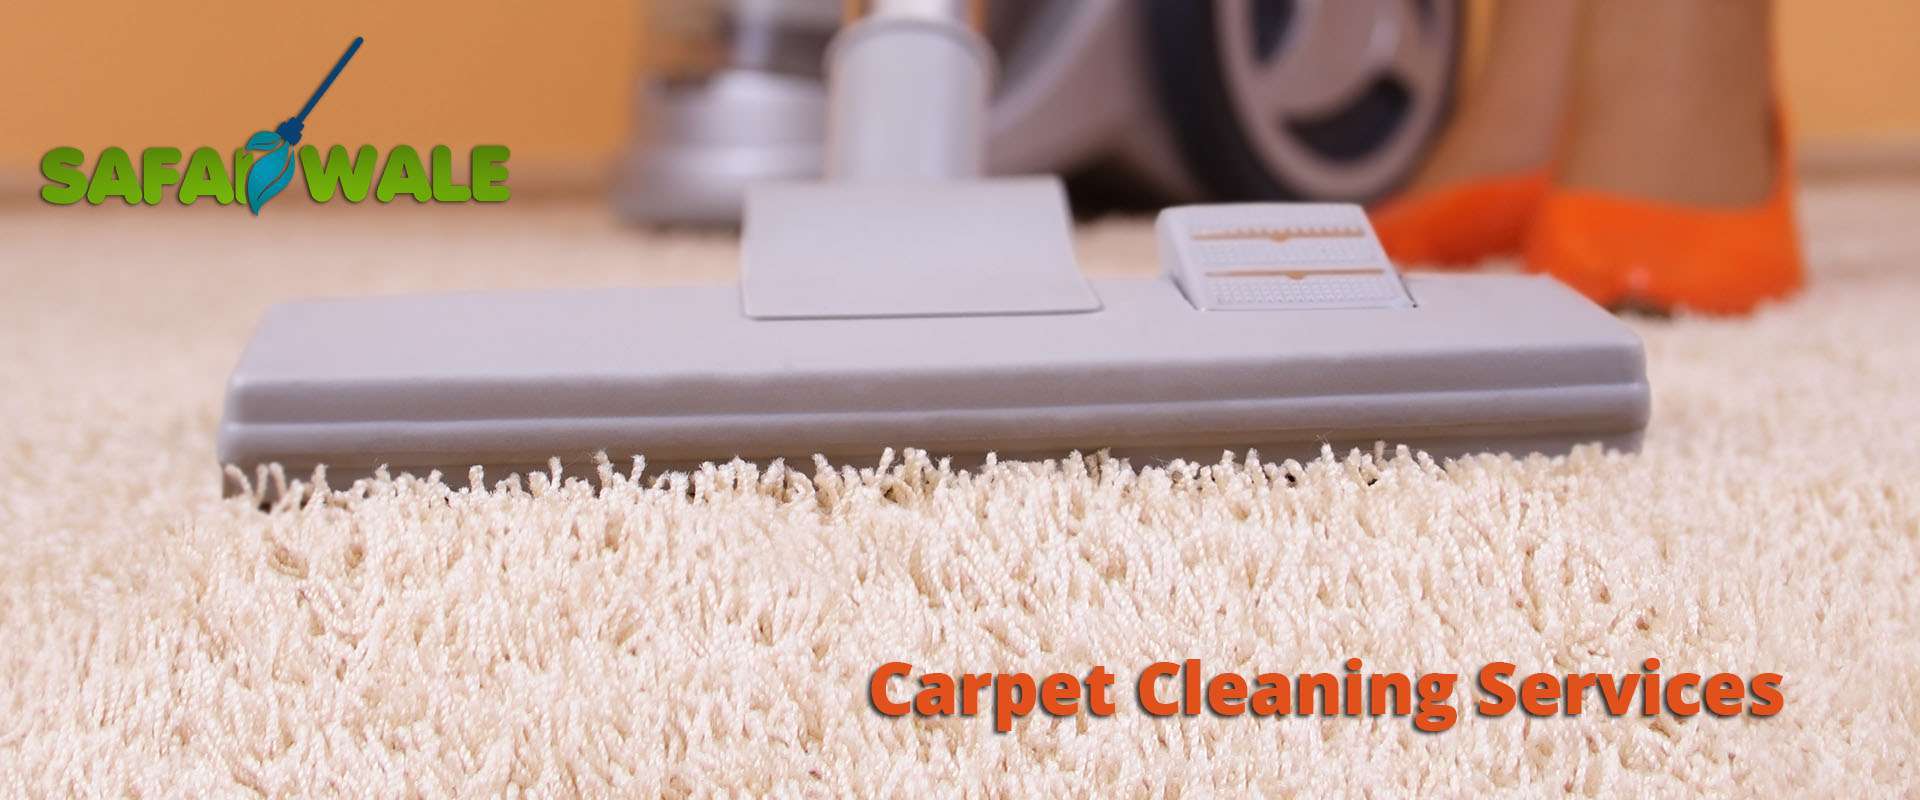 Carpet Cleaning Services In Adai, Navi Mumbai